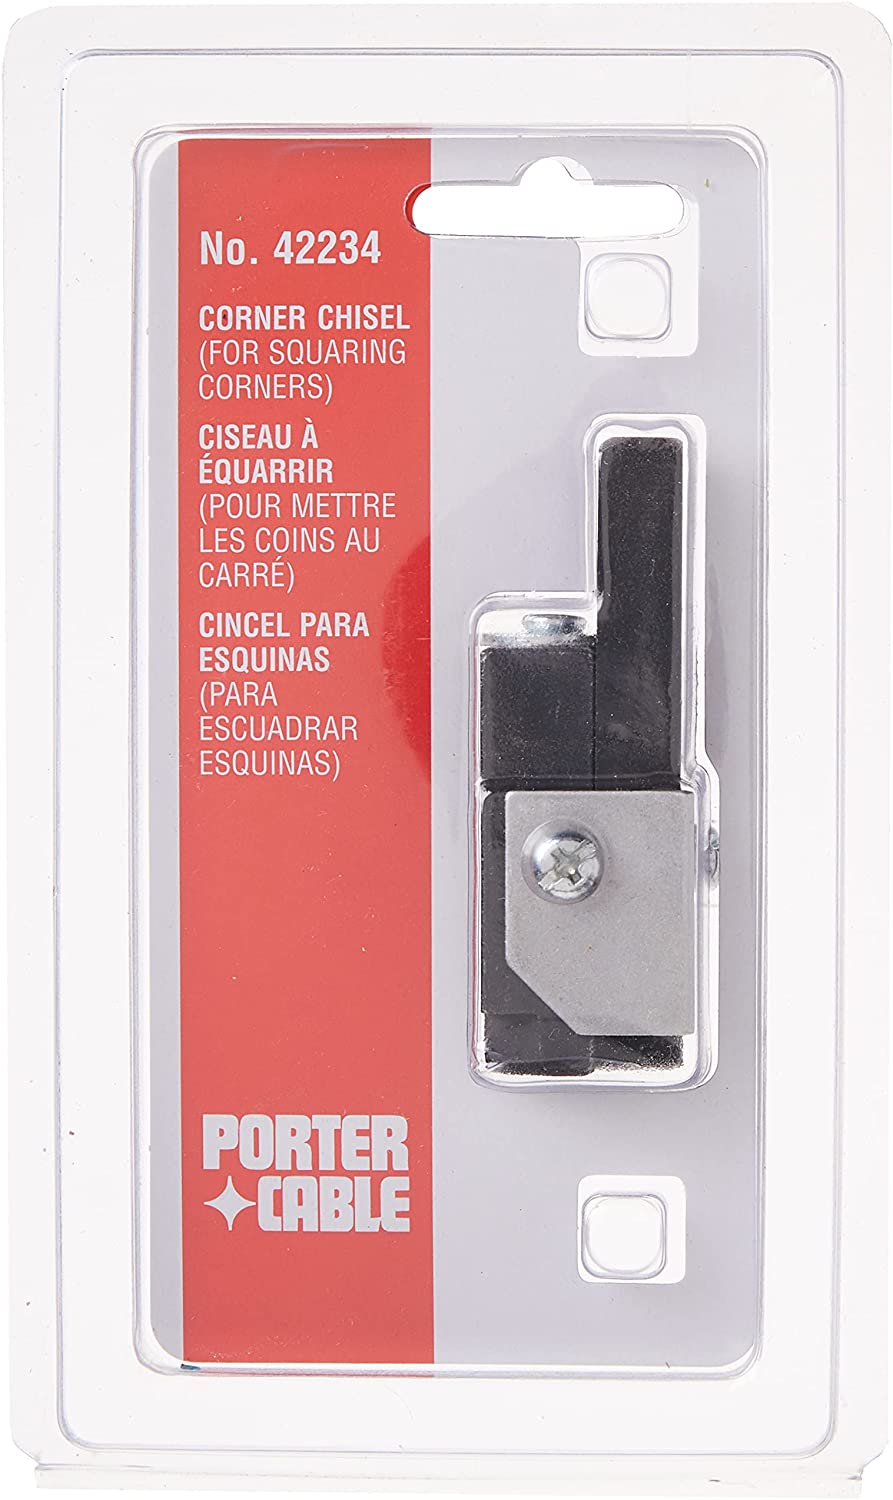 PORTER-CABLE Corner Chisel (42234) - Self aligns $19.99